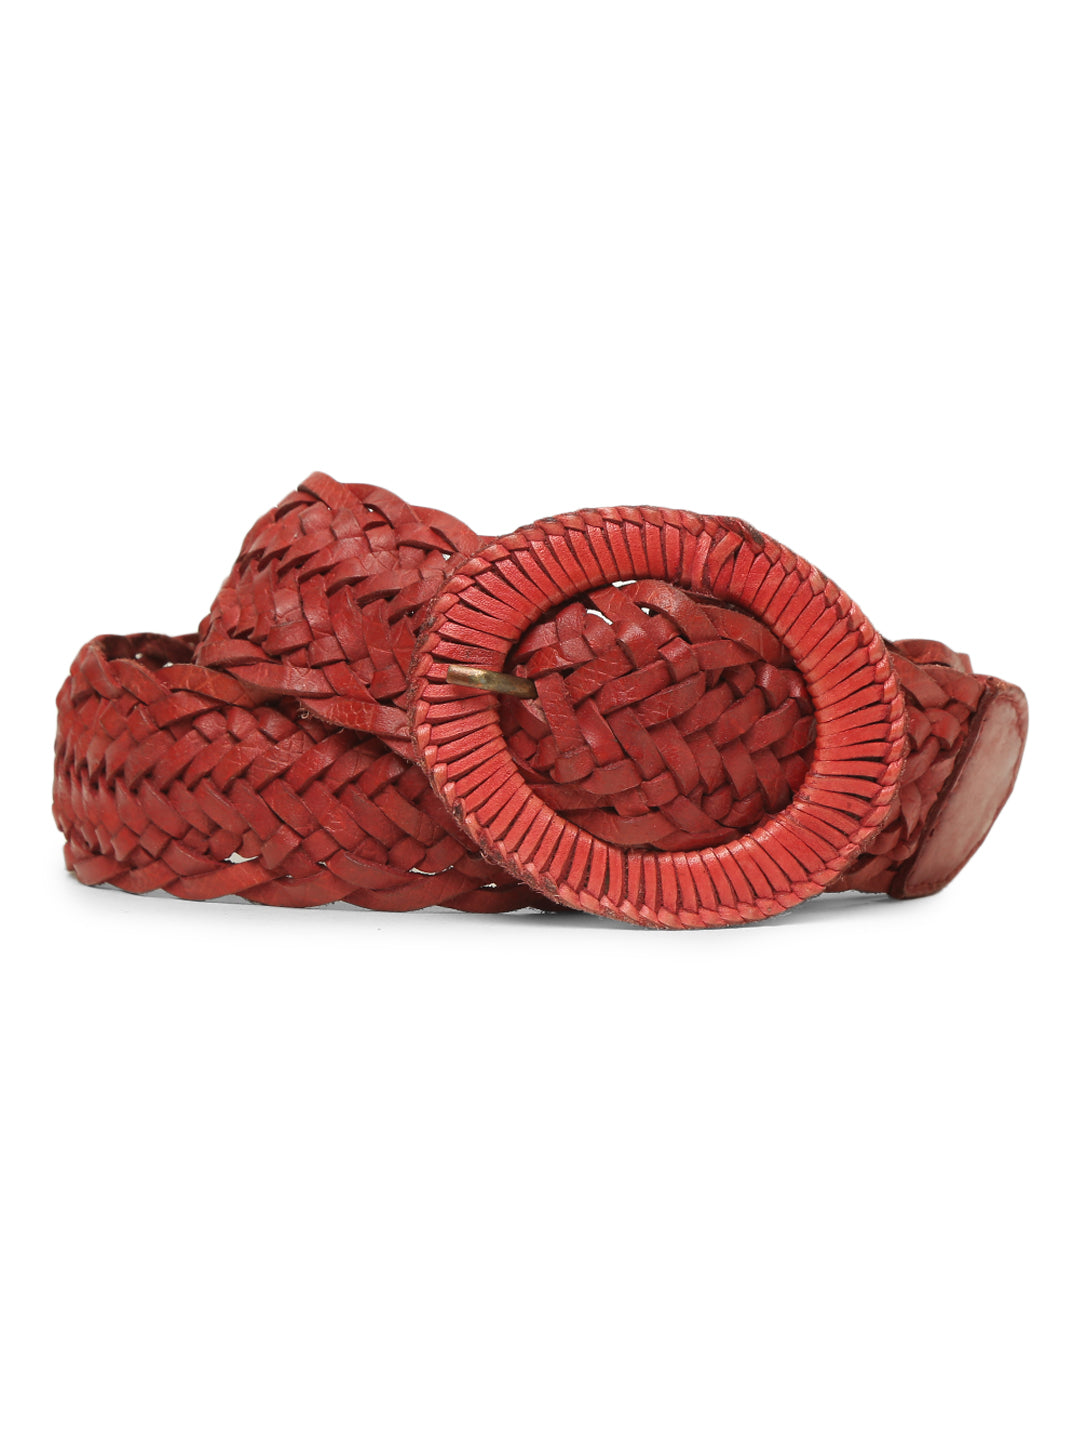 Genuine Red Leather Hand Weaving Women Belt